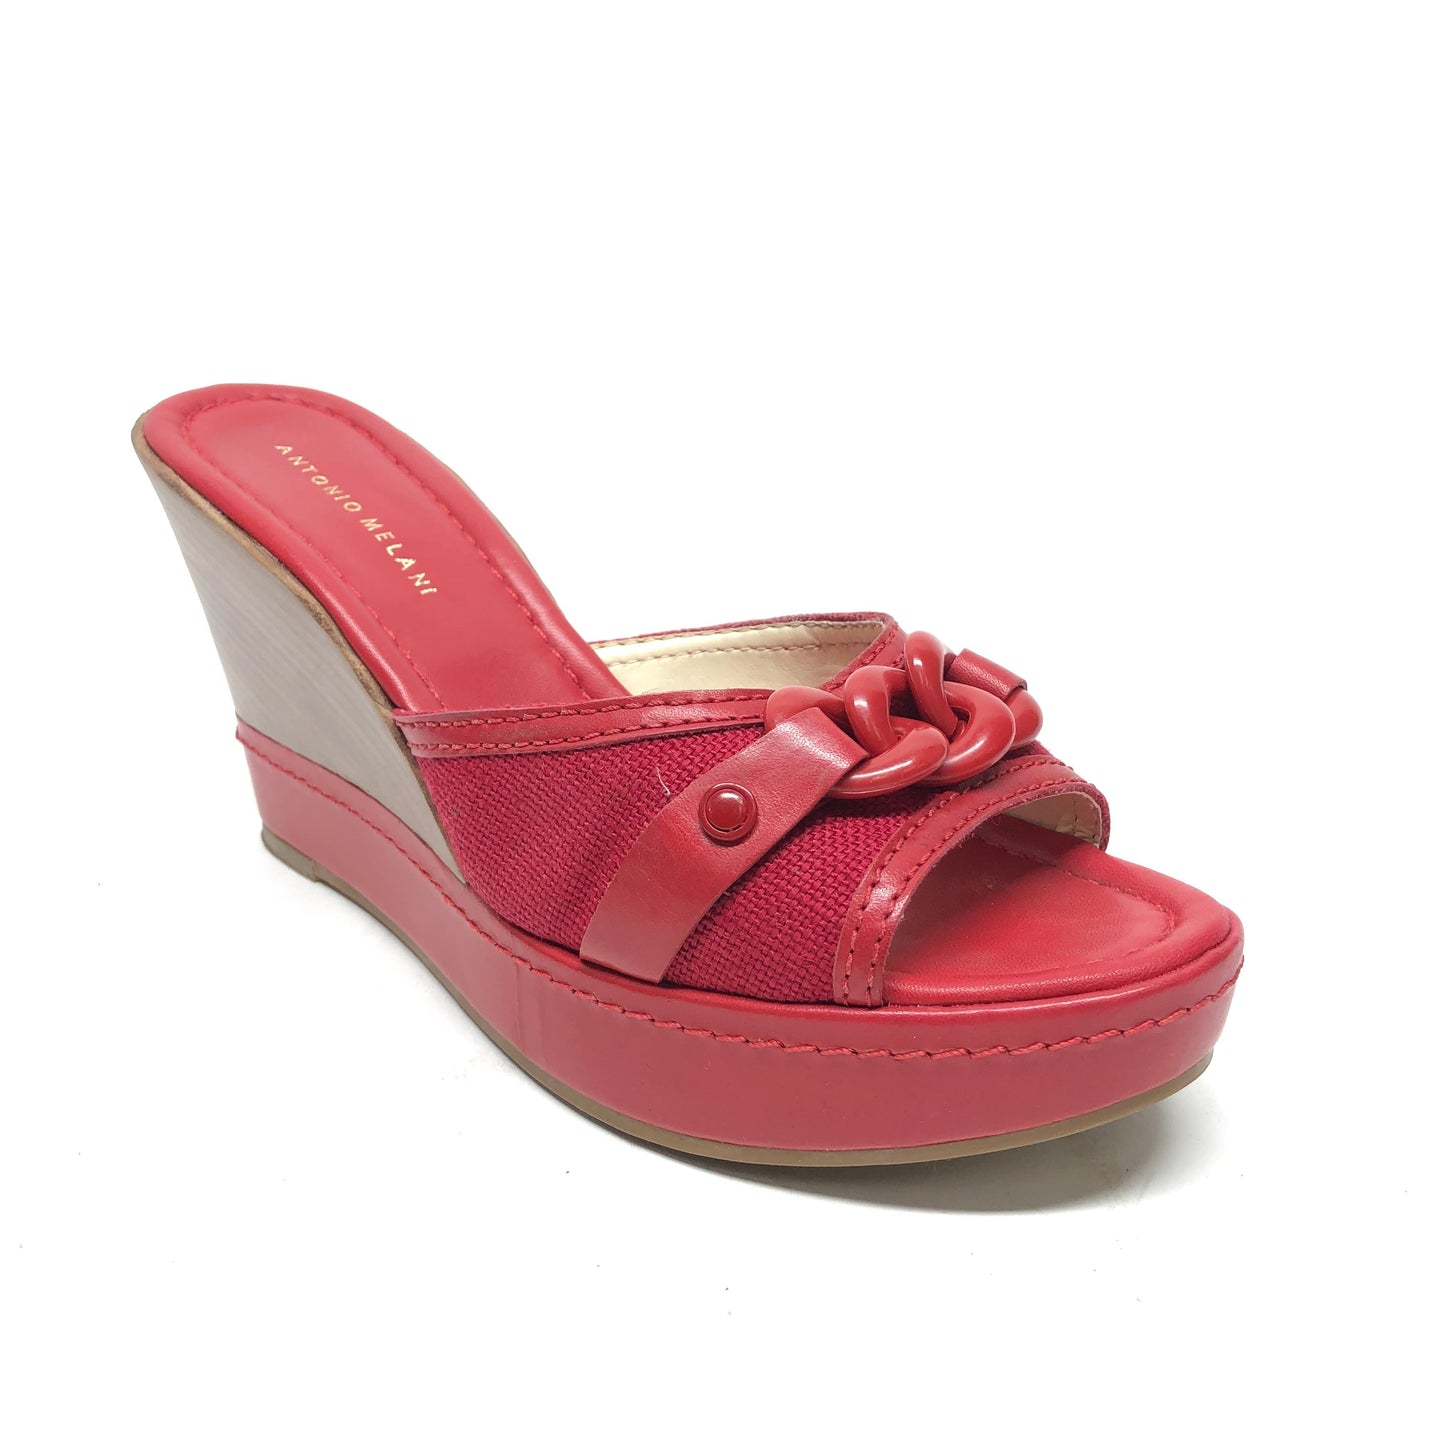 Red Shoes Heels Wedge Antonio Melani, Size 10